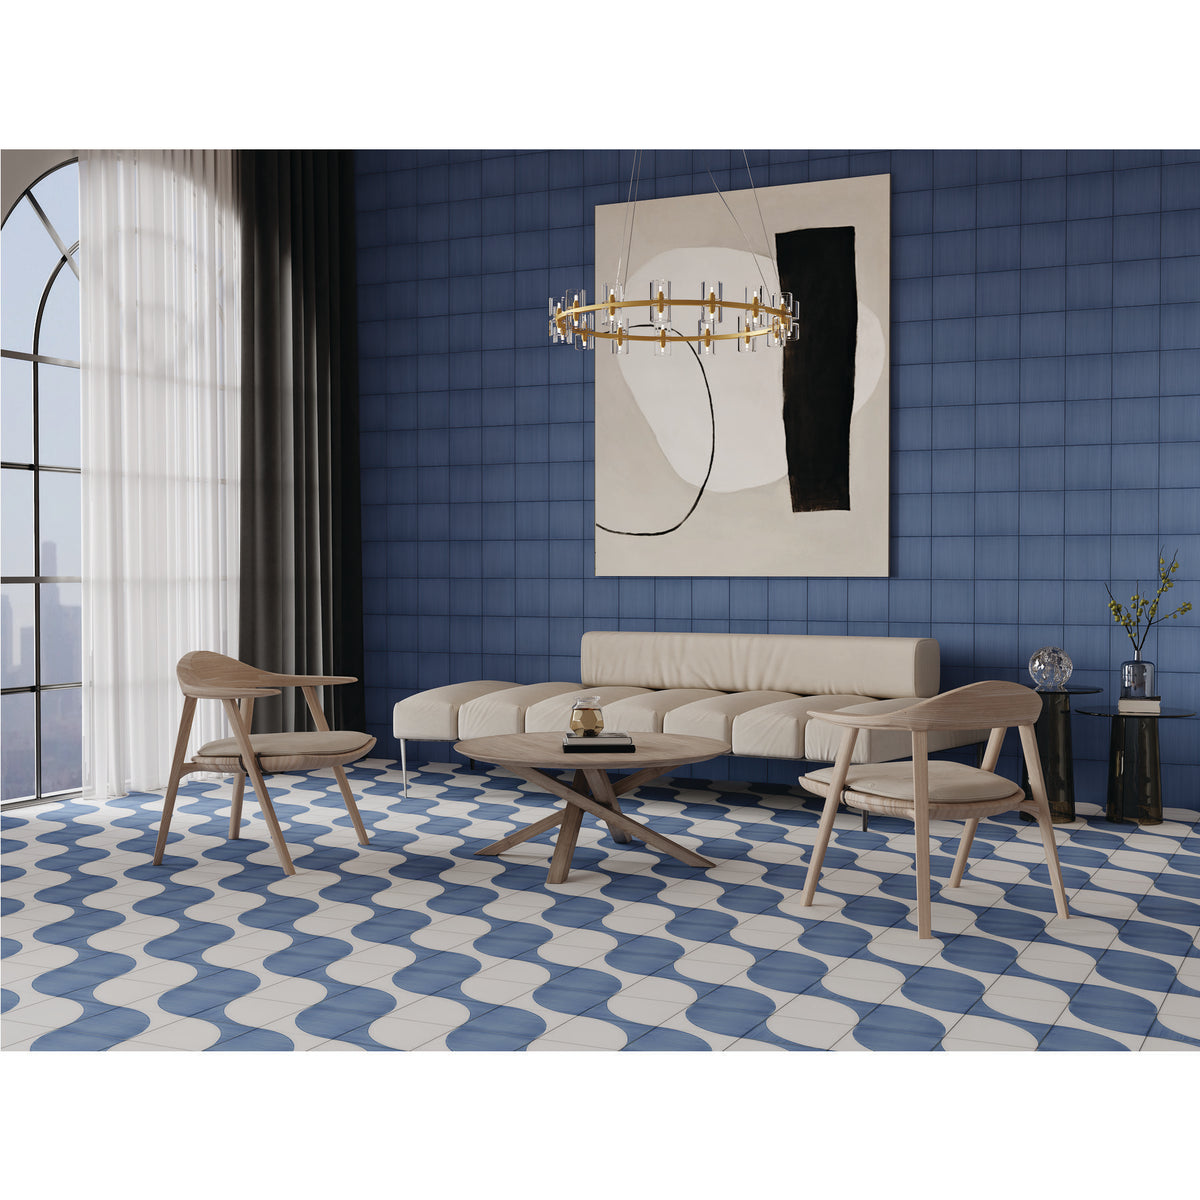 Marazzi - Scenario 8 in. x 8 in. Glazed Porcelain Tile - SR24 Blue Convex Floor Install